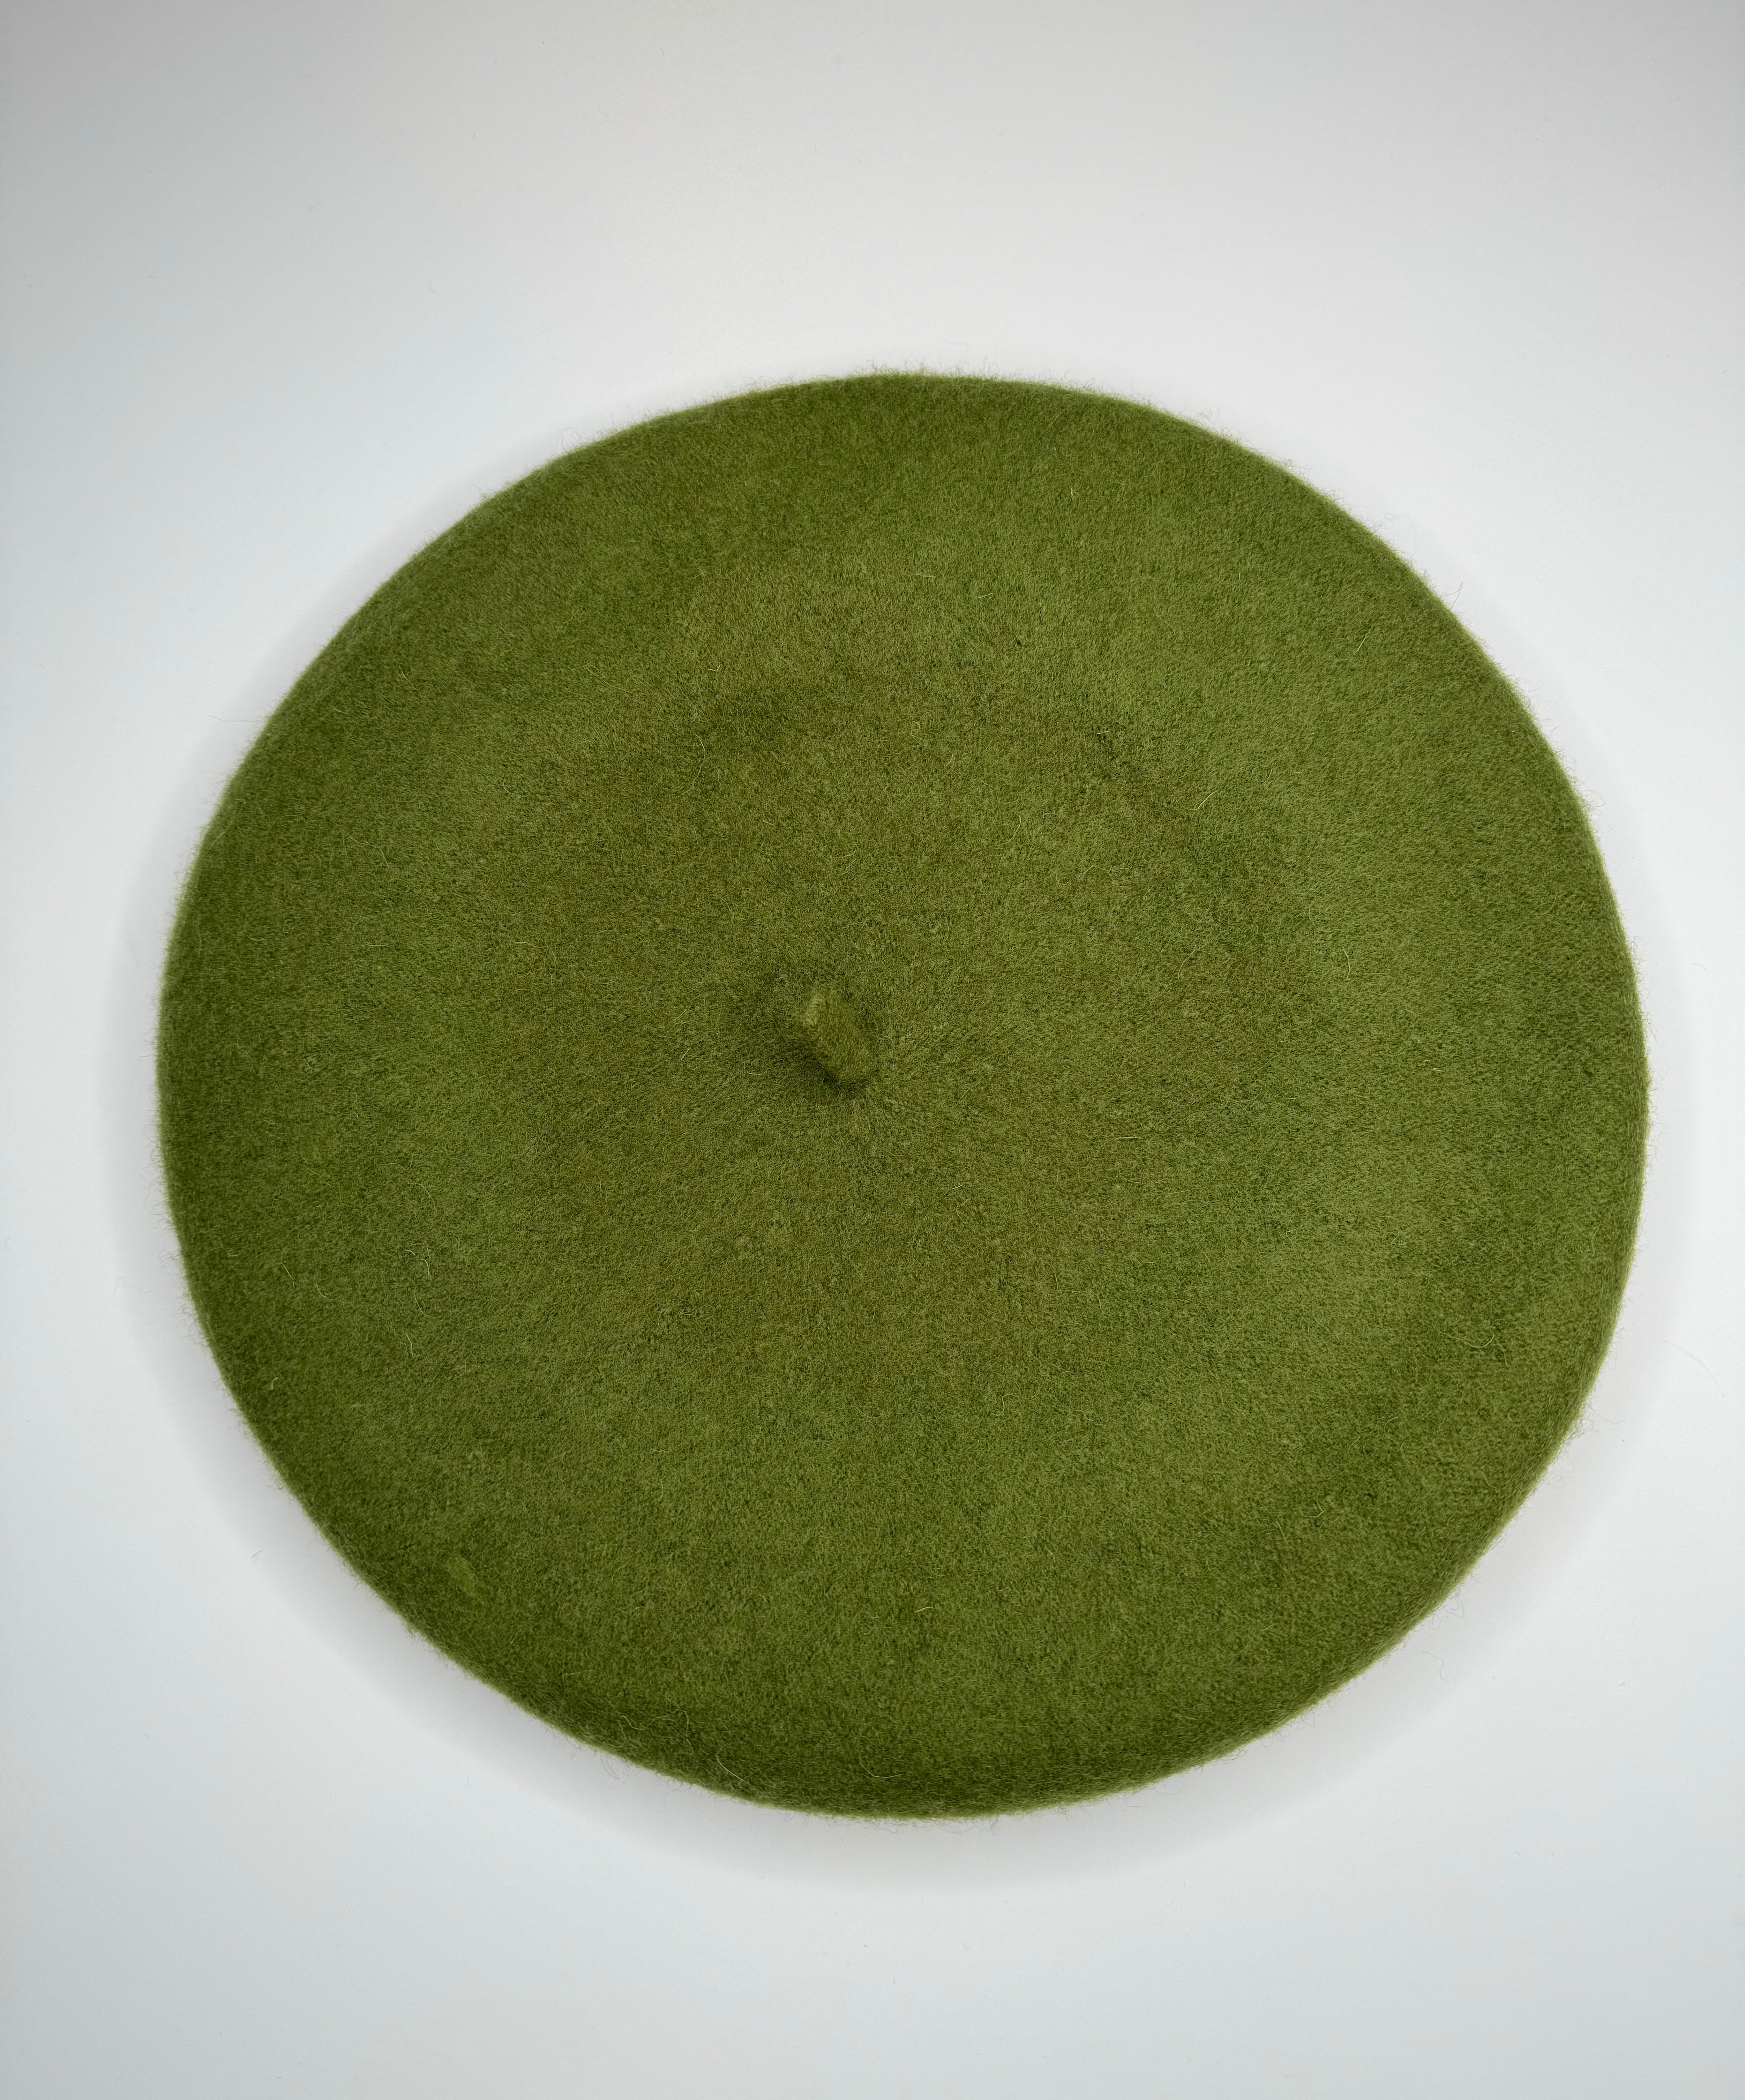 Olive green beret